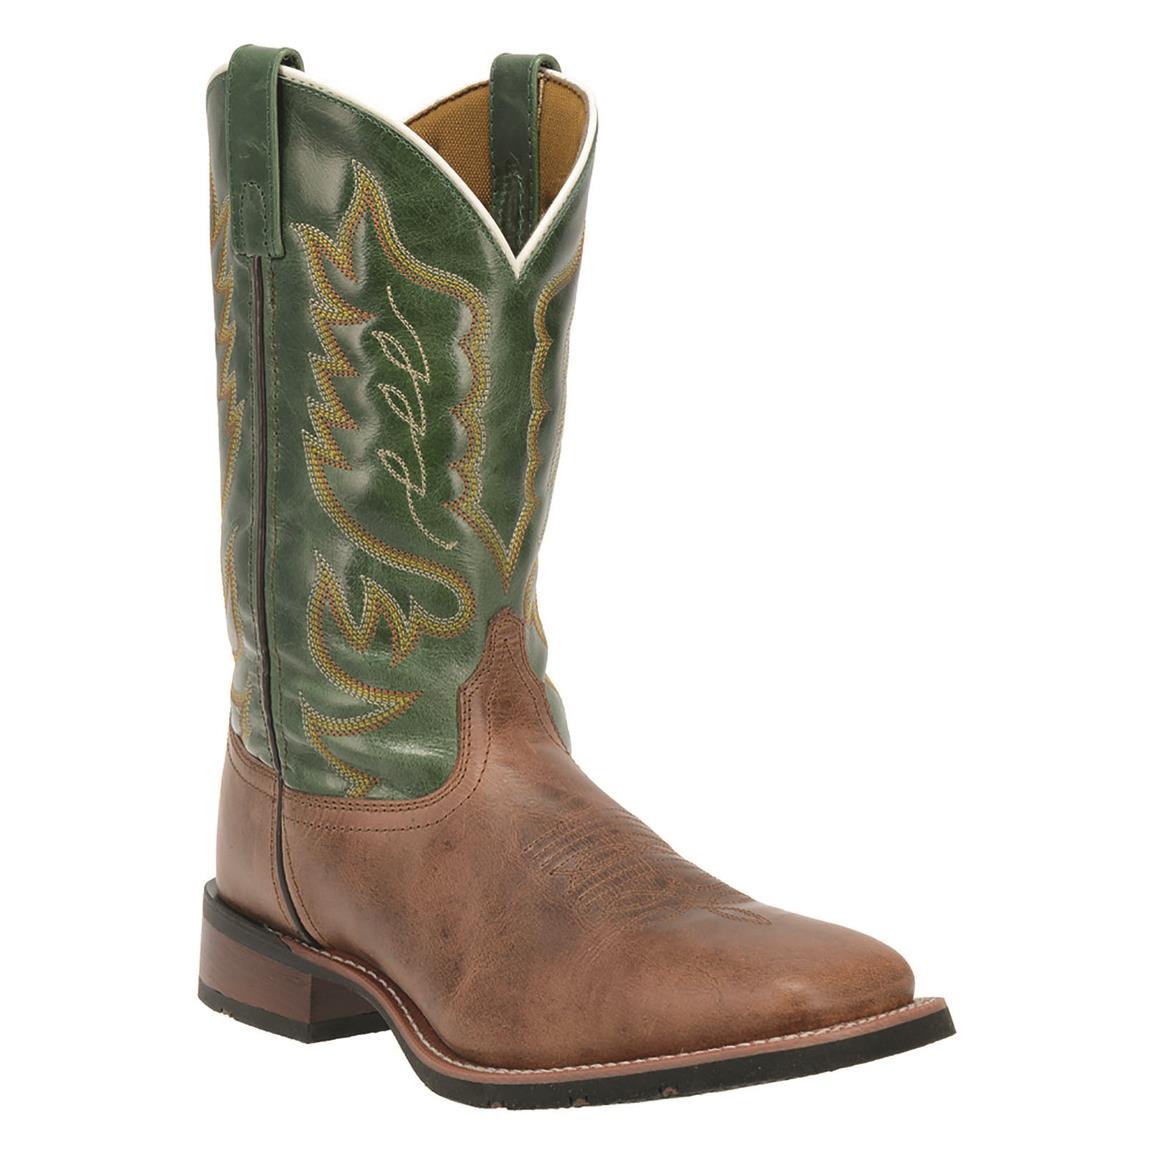 Laredo Men's Montana 2 Leather Western Boots, Tan/green